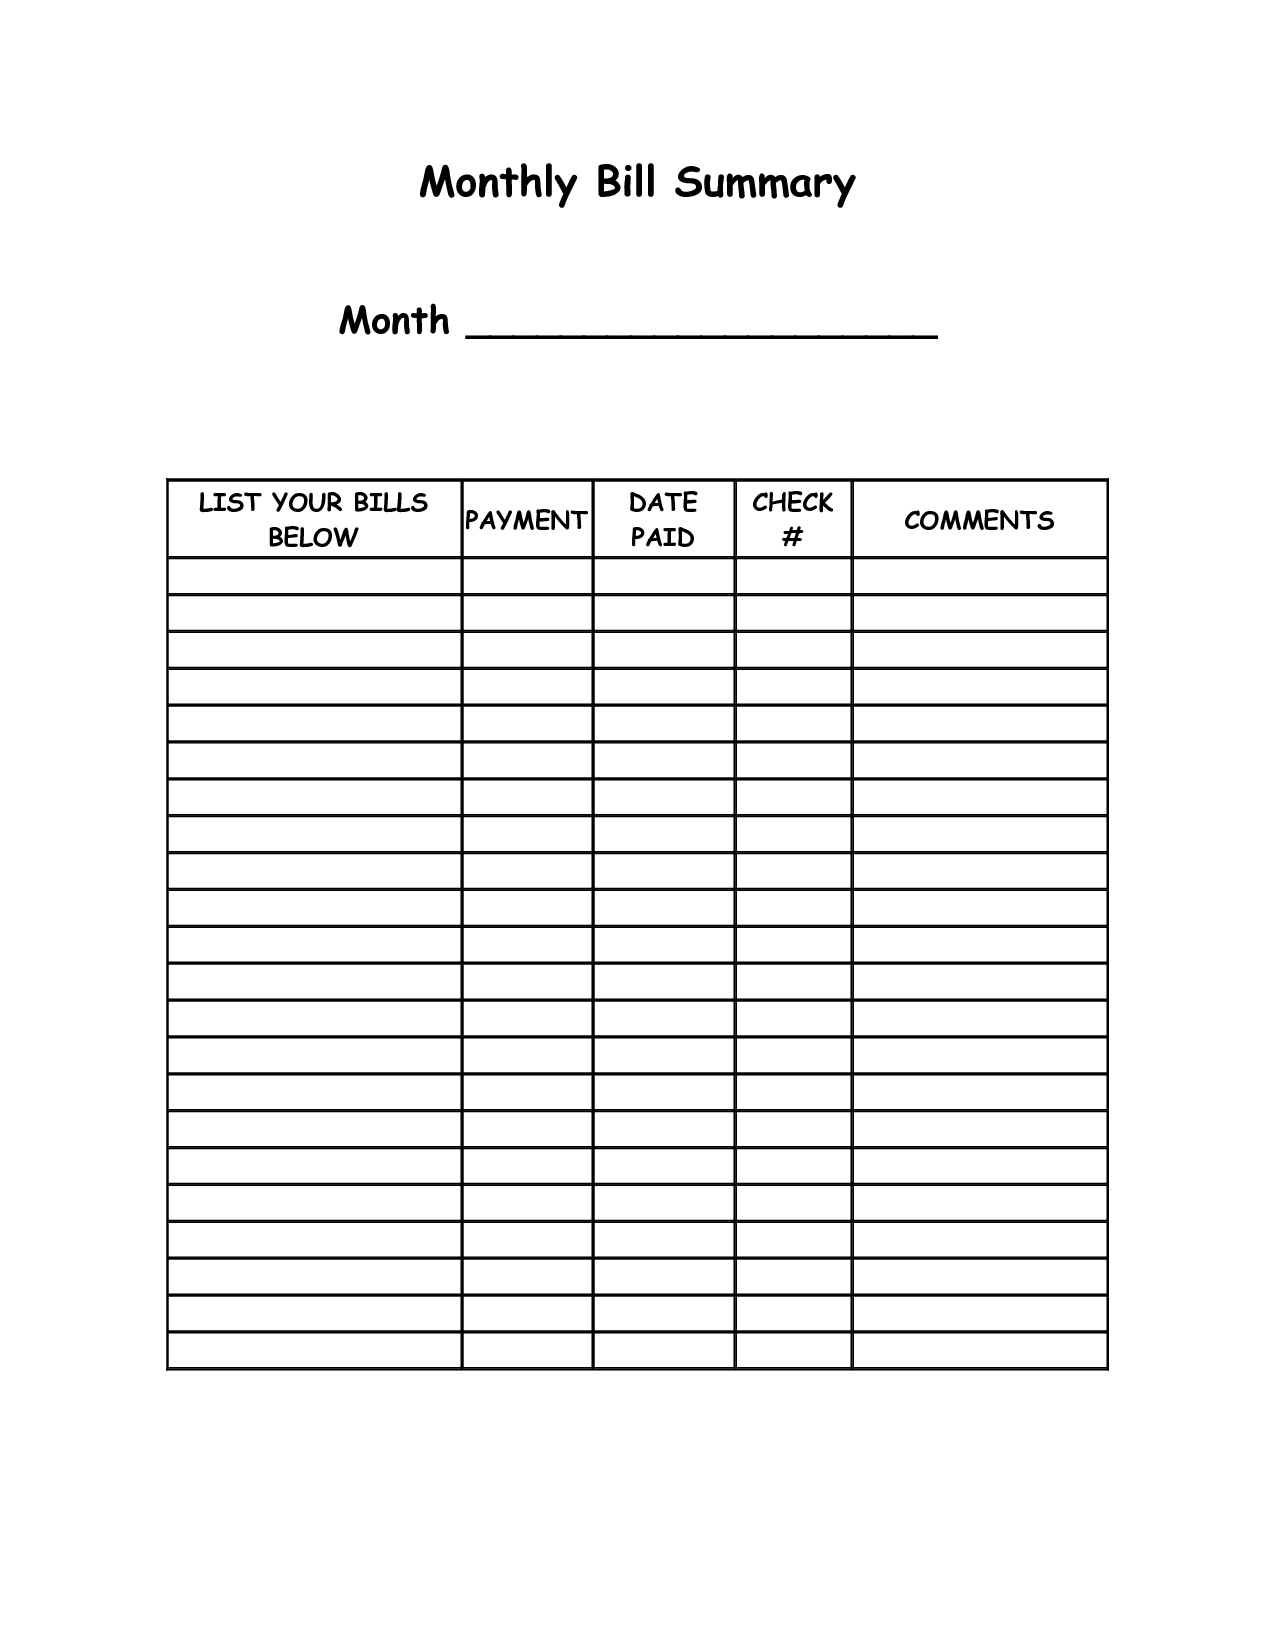 Monthly Bill Summary Doc | Organization | Organizing Monthly